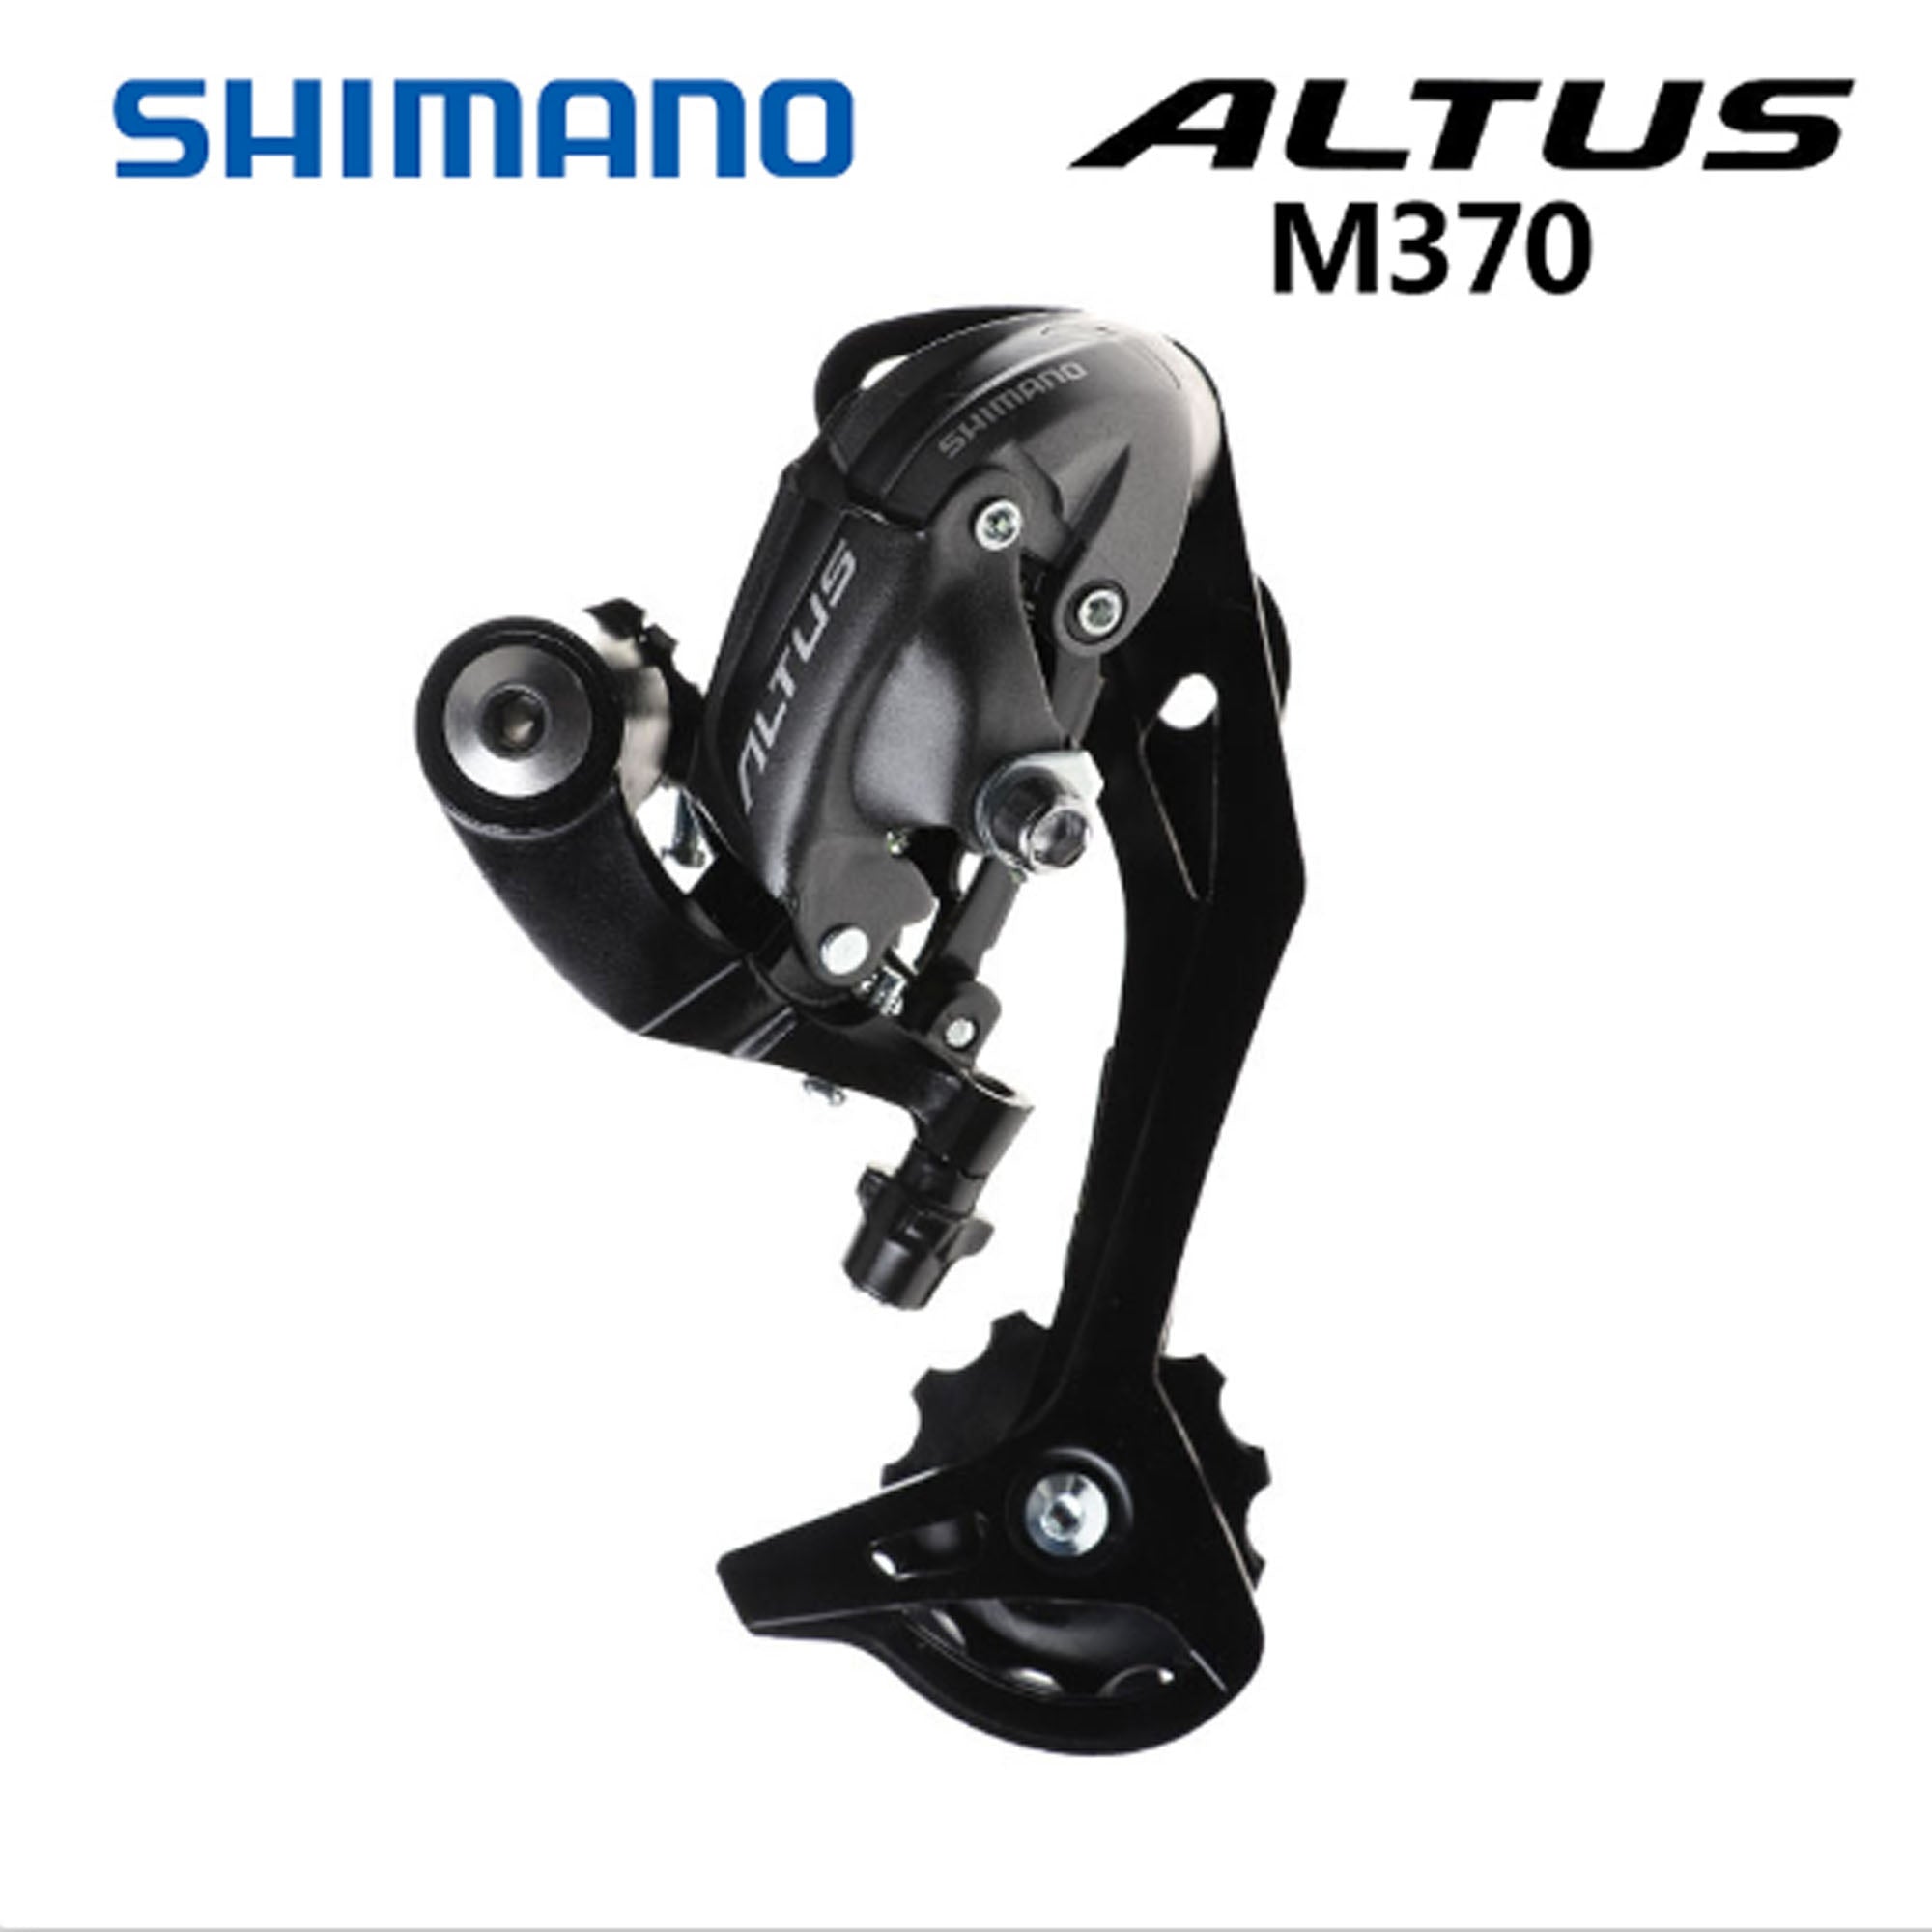 SHIMANO ALTUS M370 9 Speed Rear Derailleur - DerakBikes